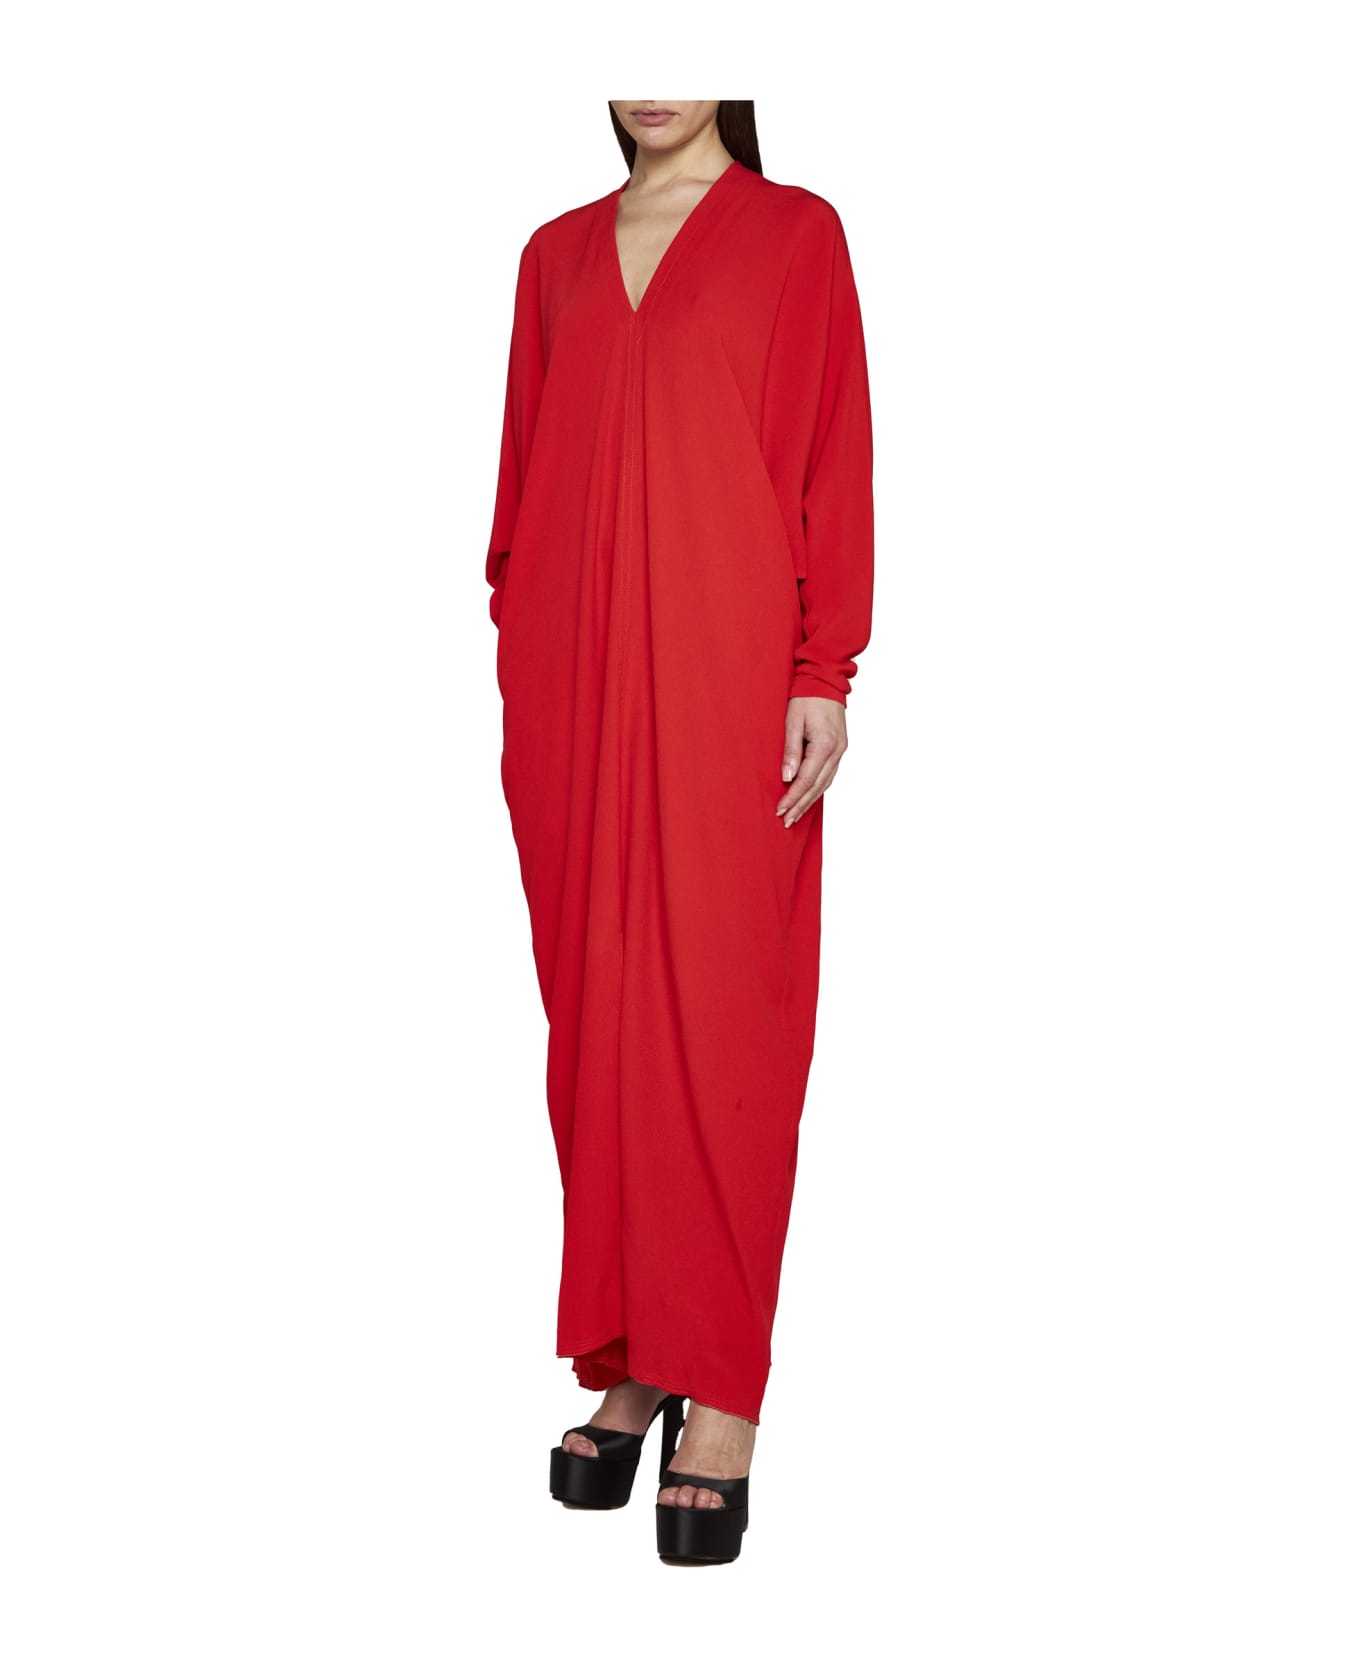 Lanvin Dress - Poppy red